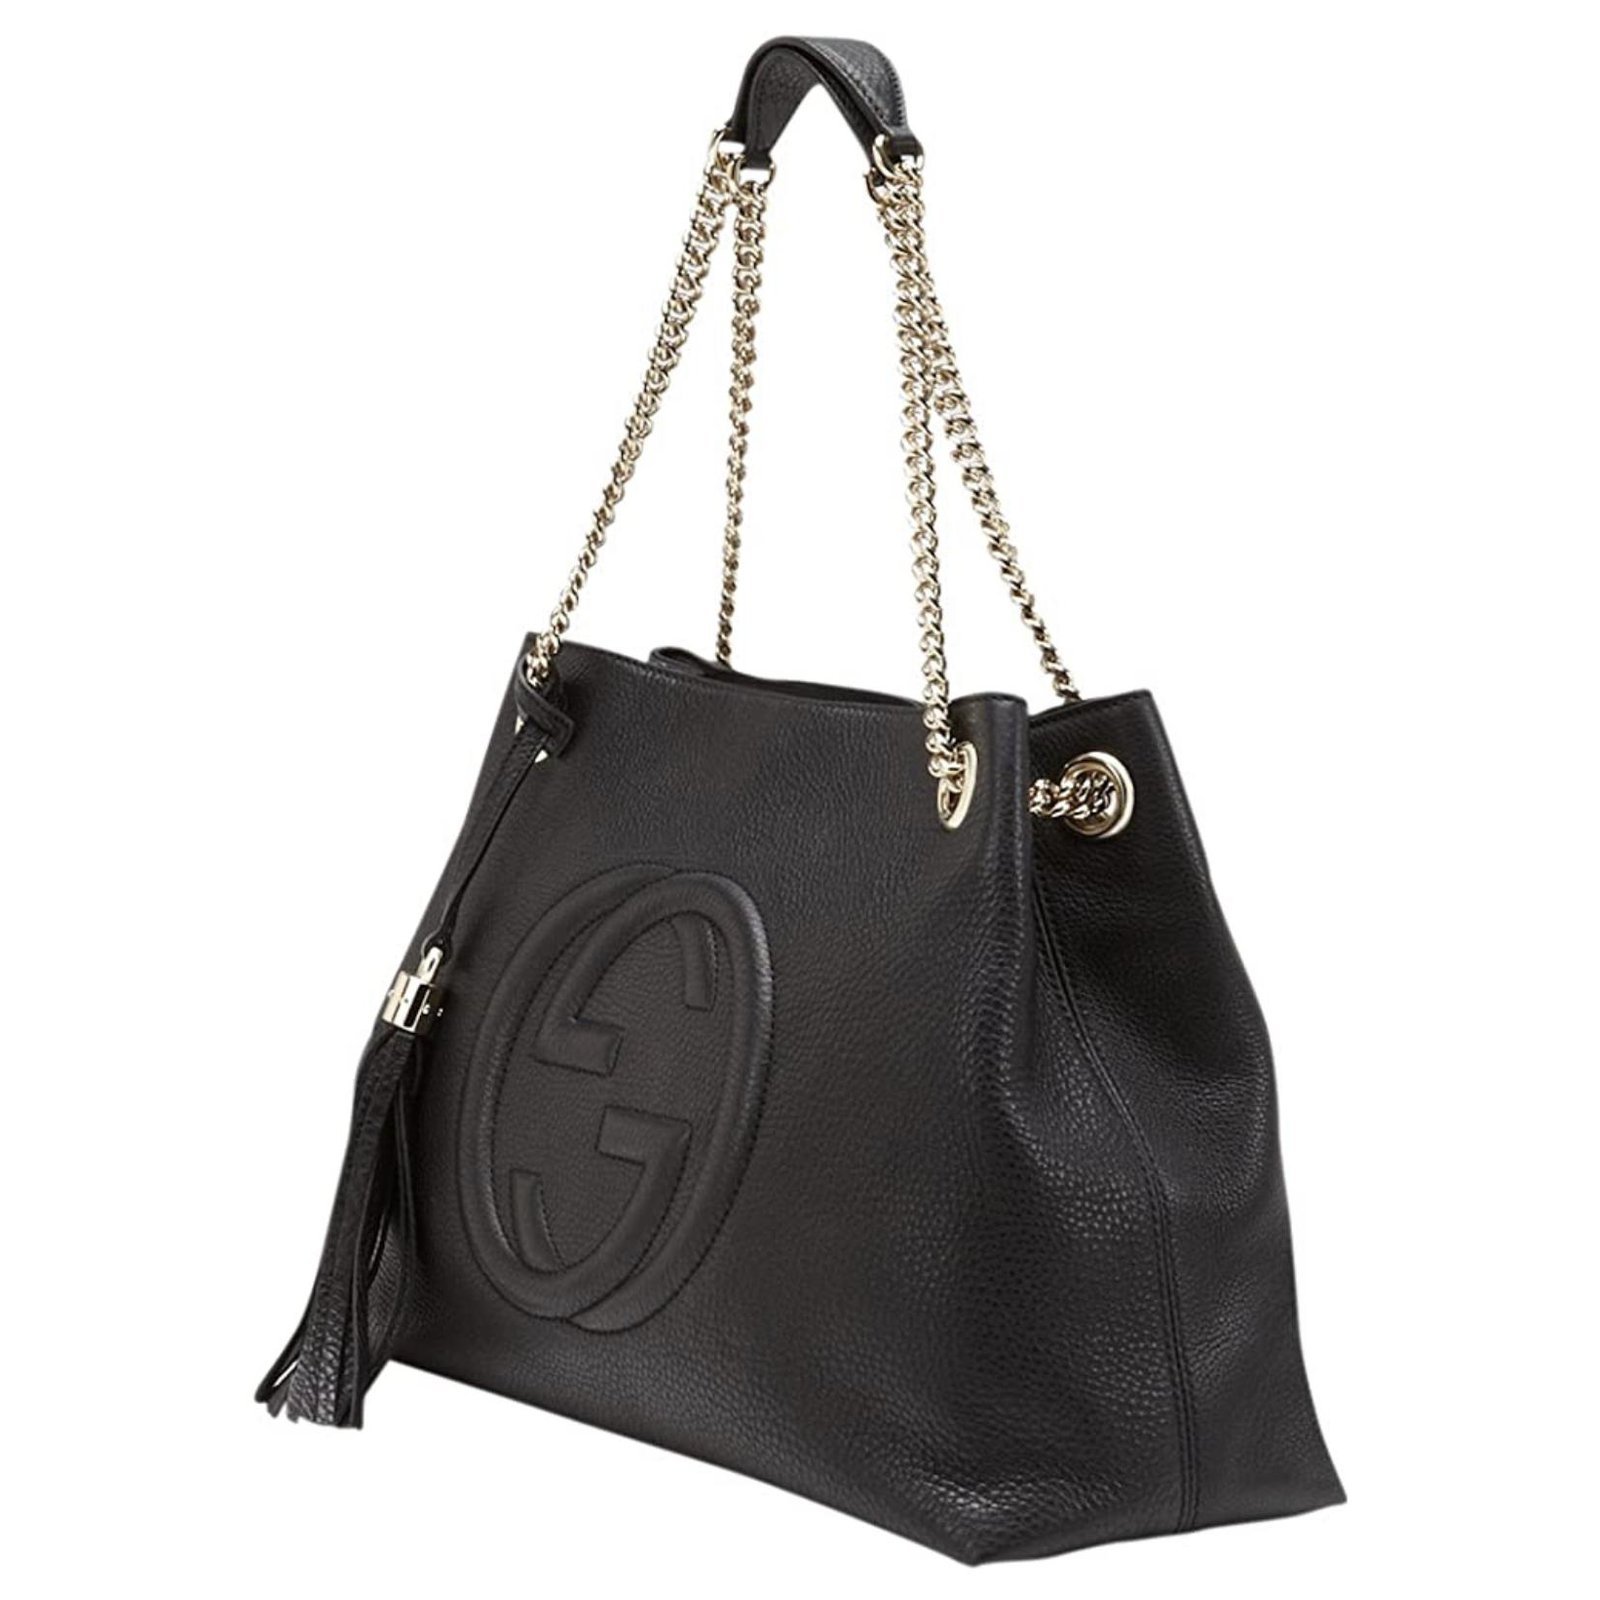 Gucci Gucci Soho tote new Handbags 